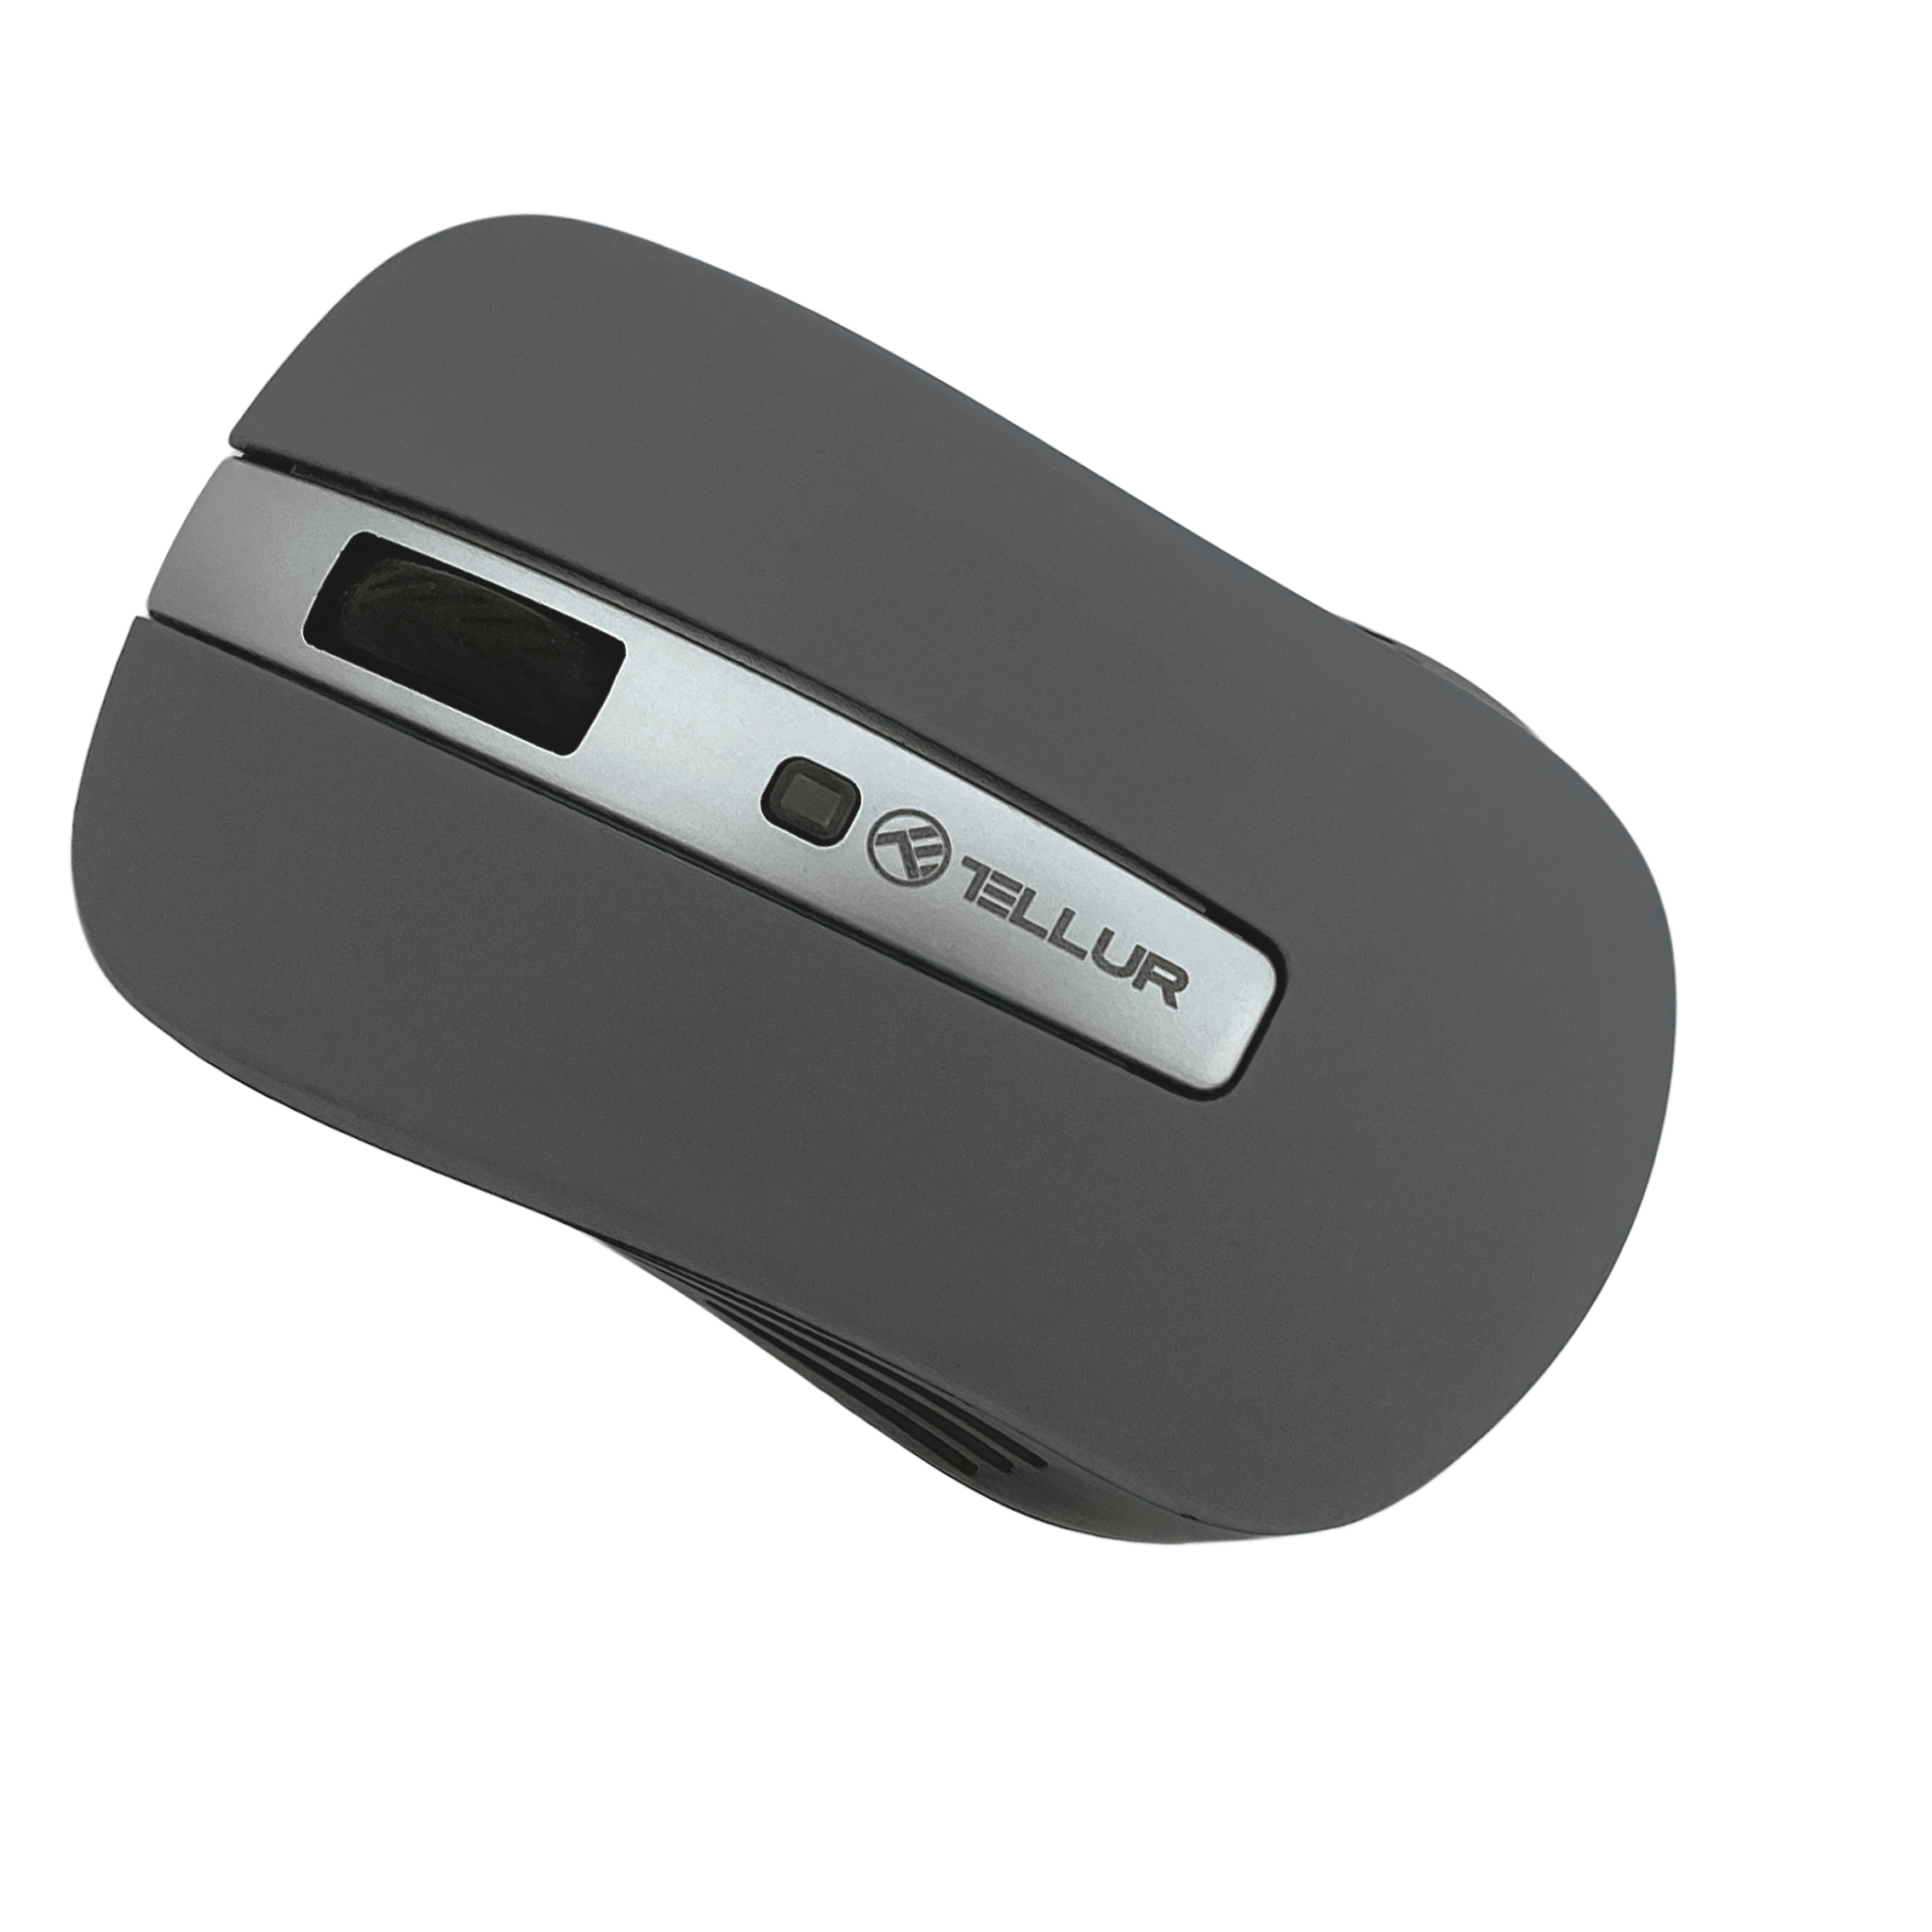 Mouse Wireless Tellur Basic, Plug and Play, LED, 800-1600 DPI reglabil, 4 Butoane, Gri Inchis Xkids